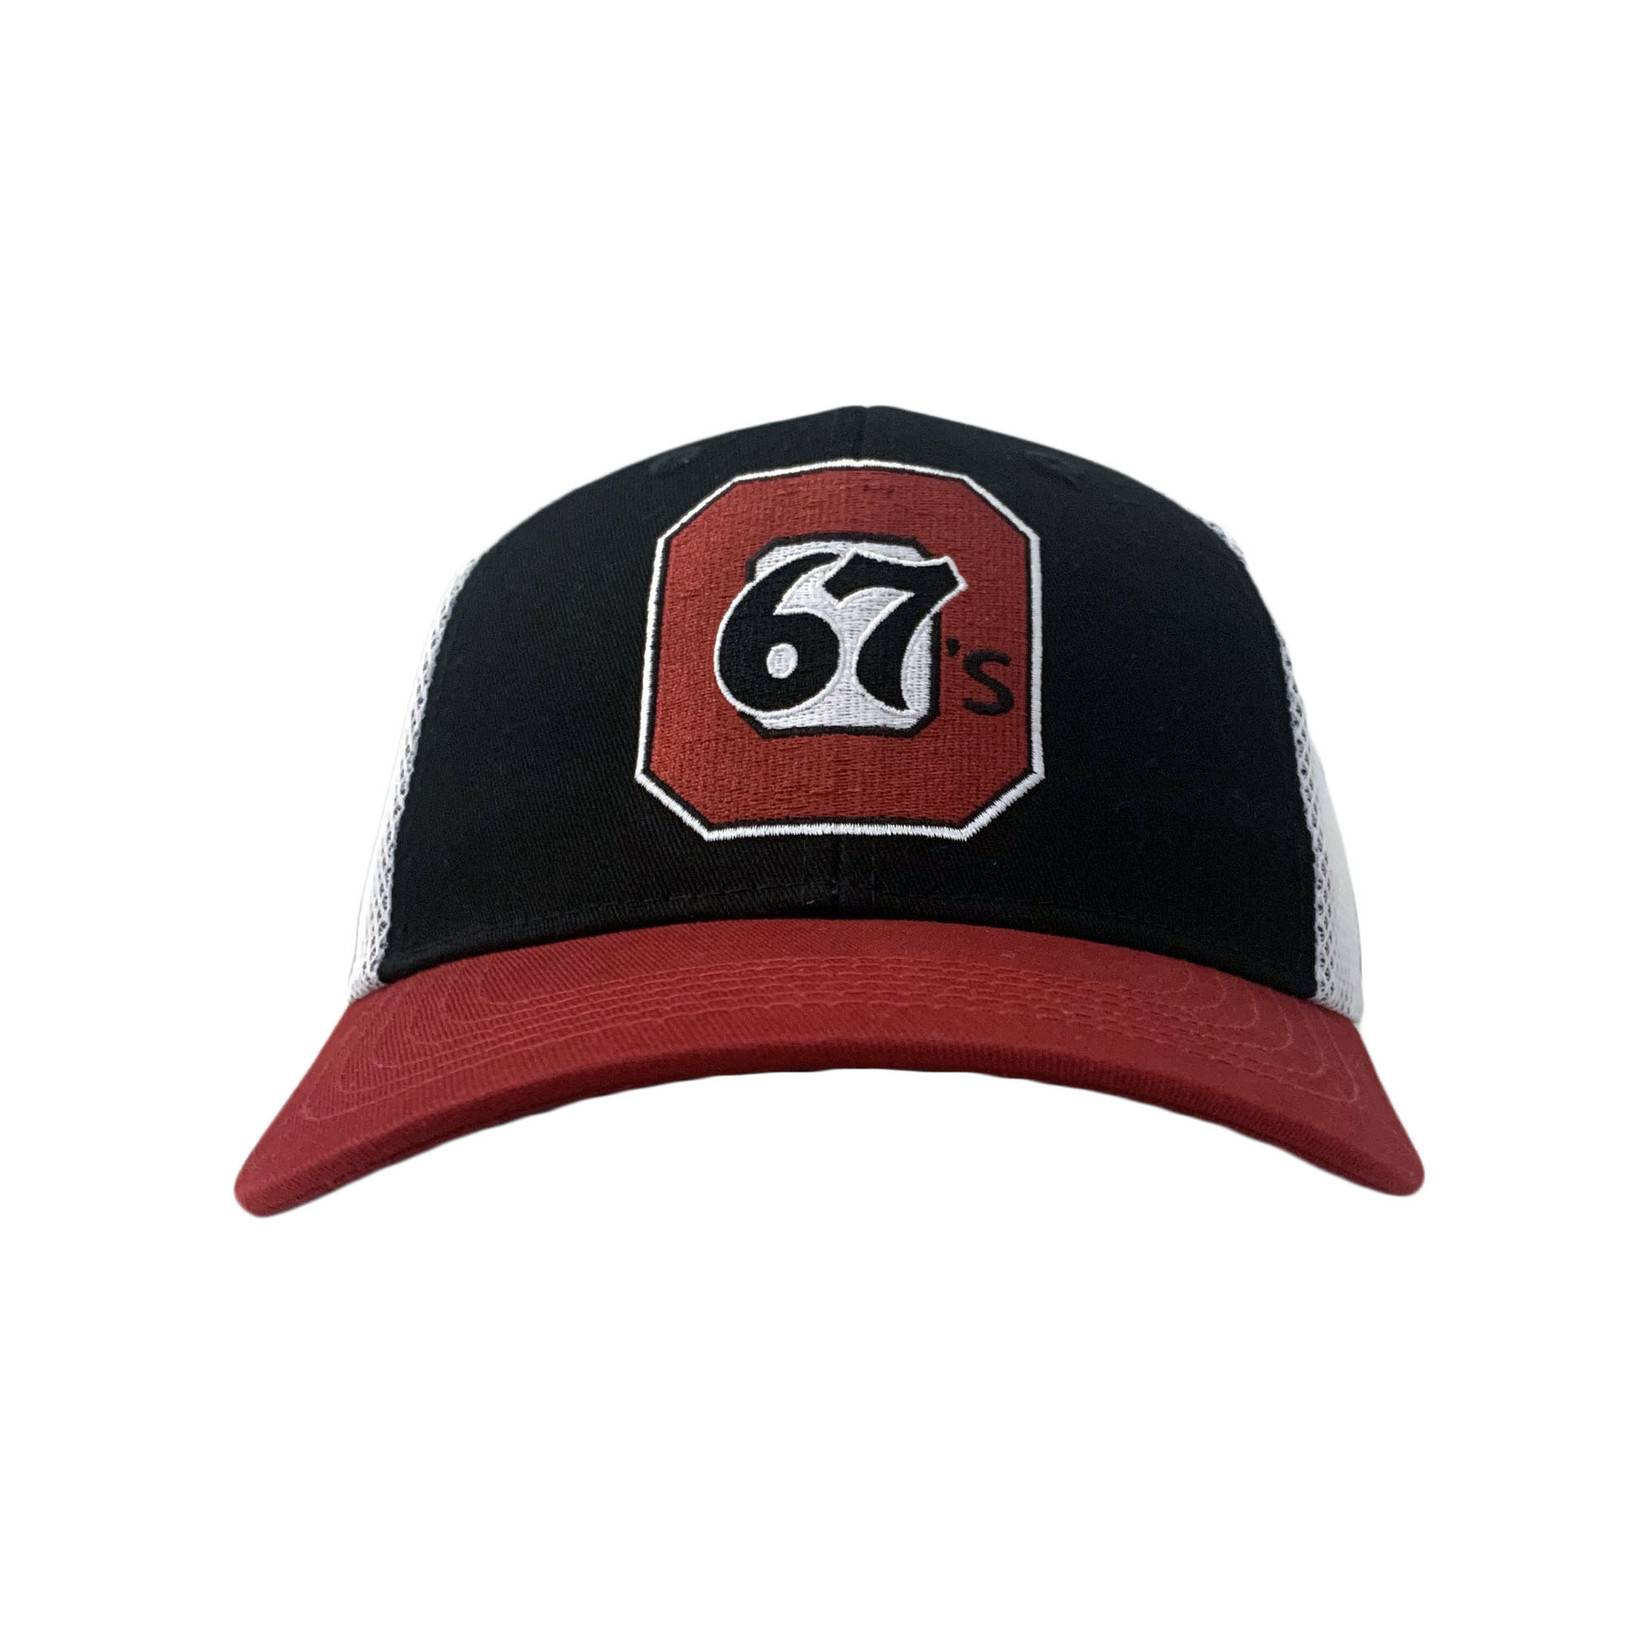 OTTAWA 67's 67's Standard Hat